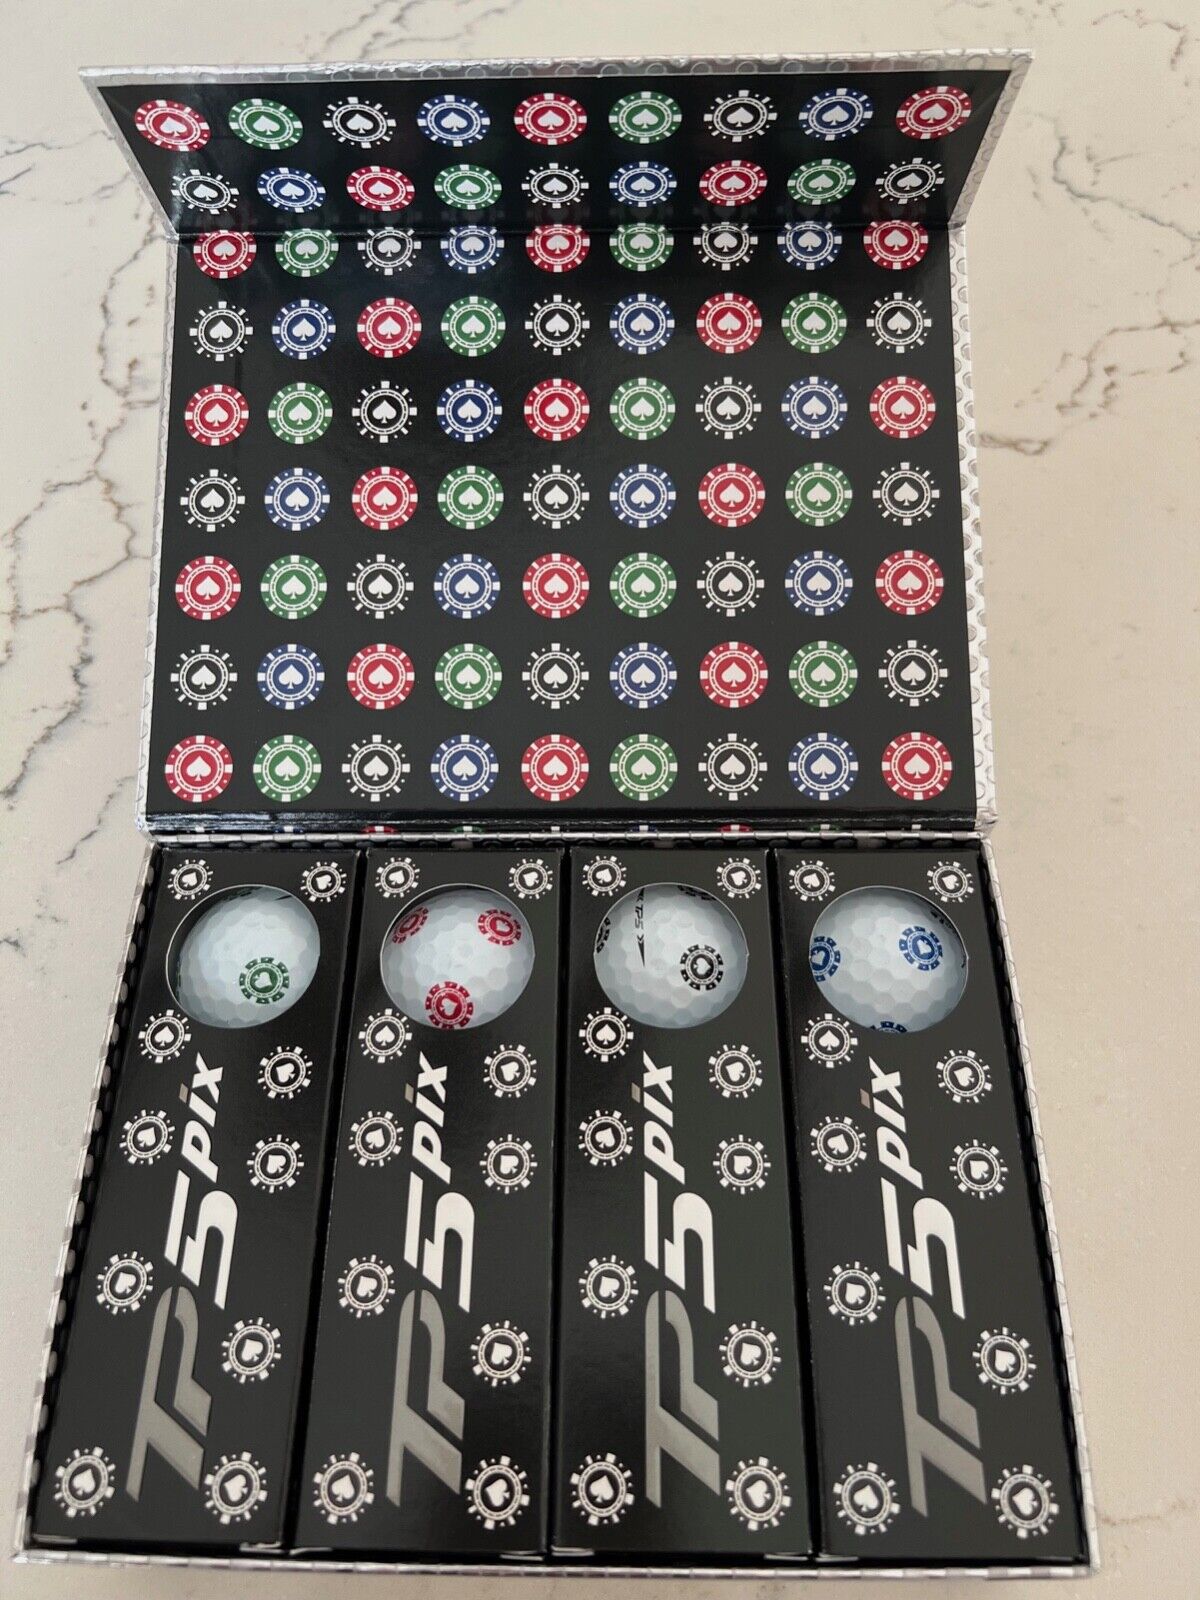 Limited Edition Taylormade TP5 Pix Poker Golf Balls (Full Box - 12 Balls)